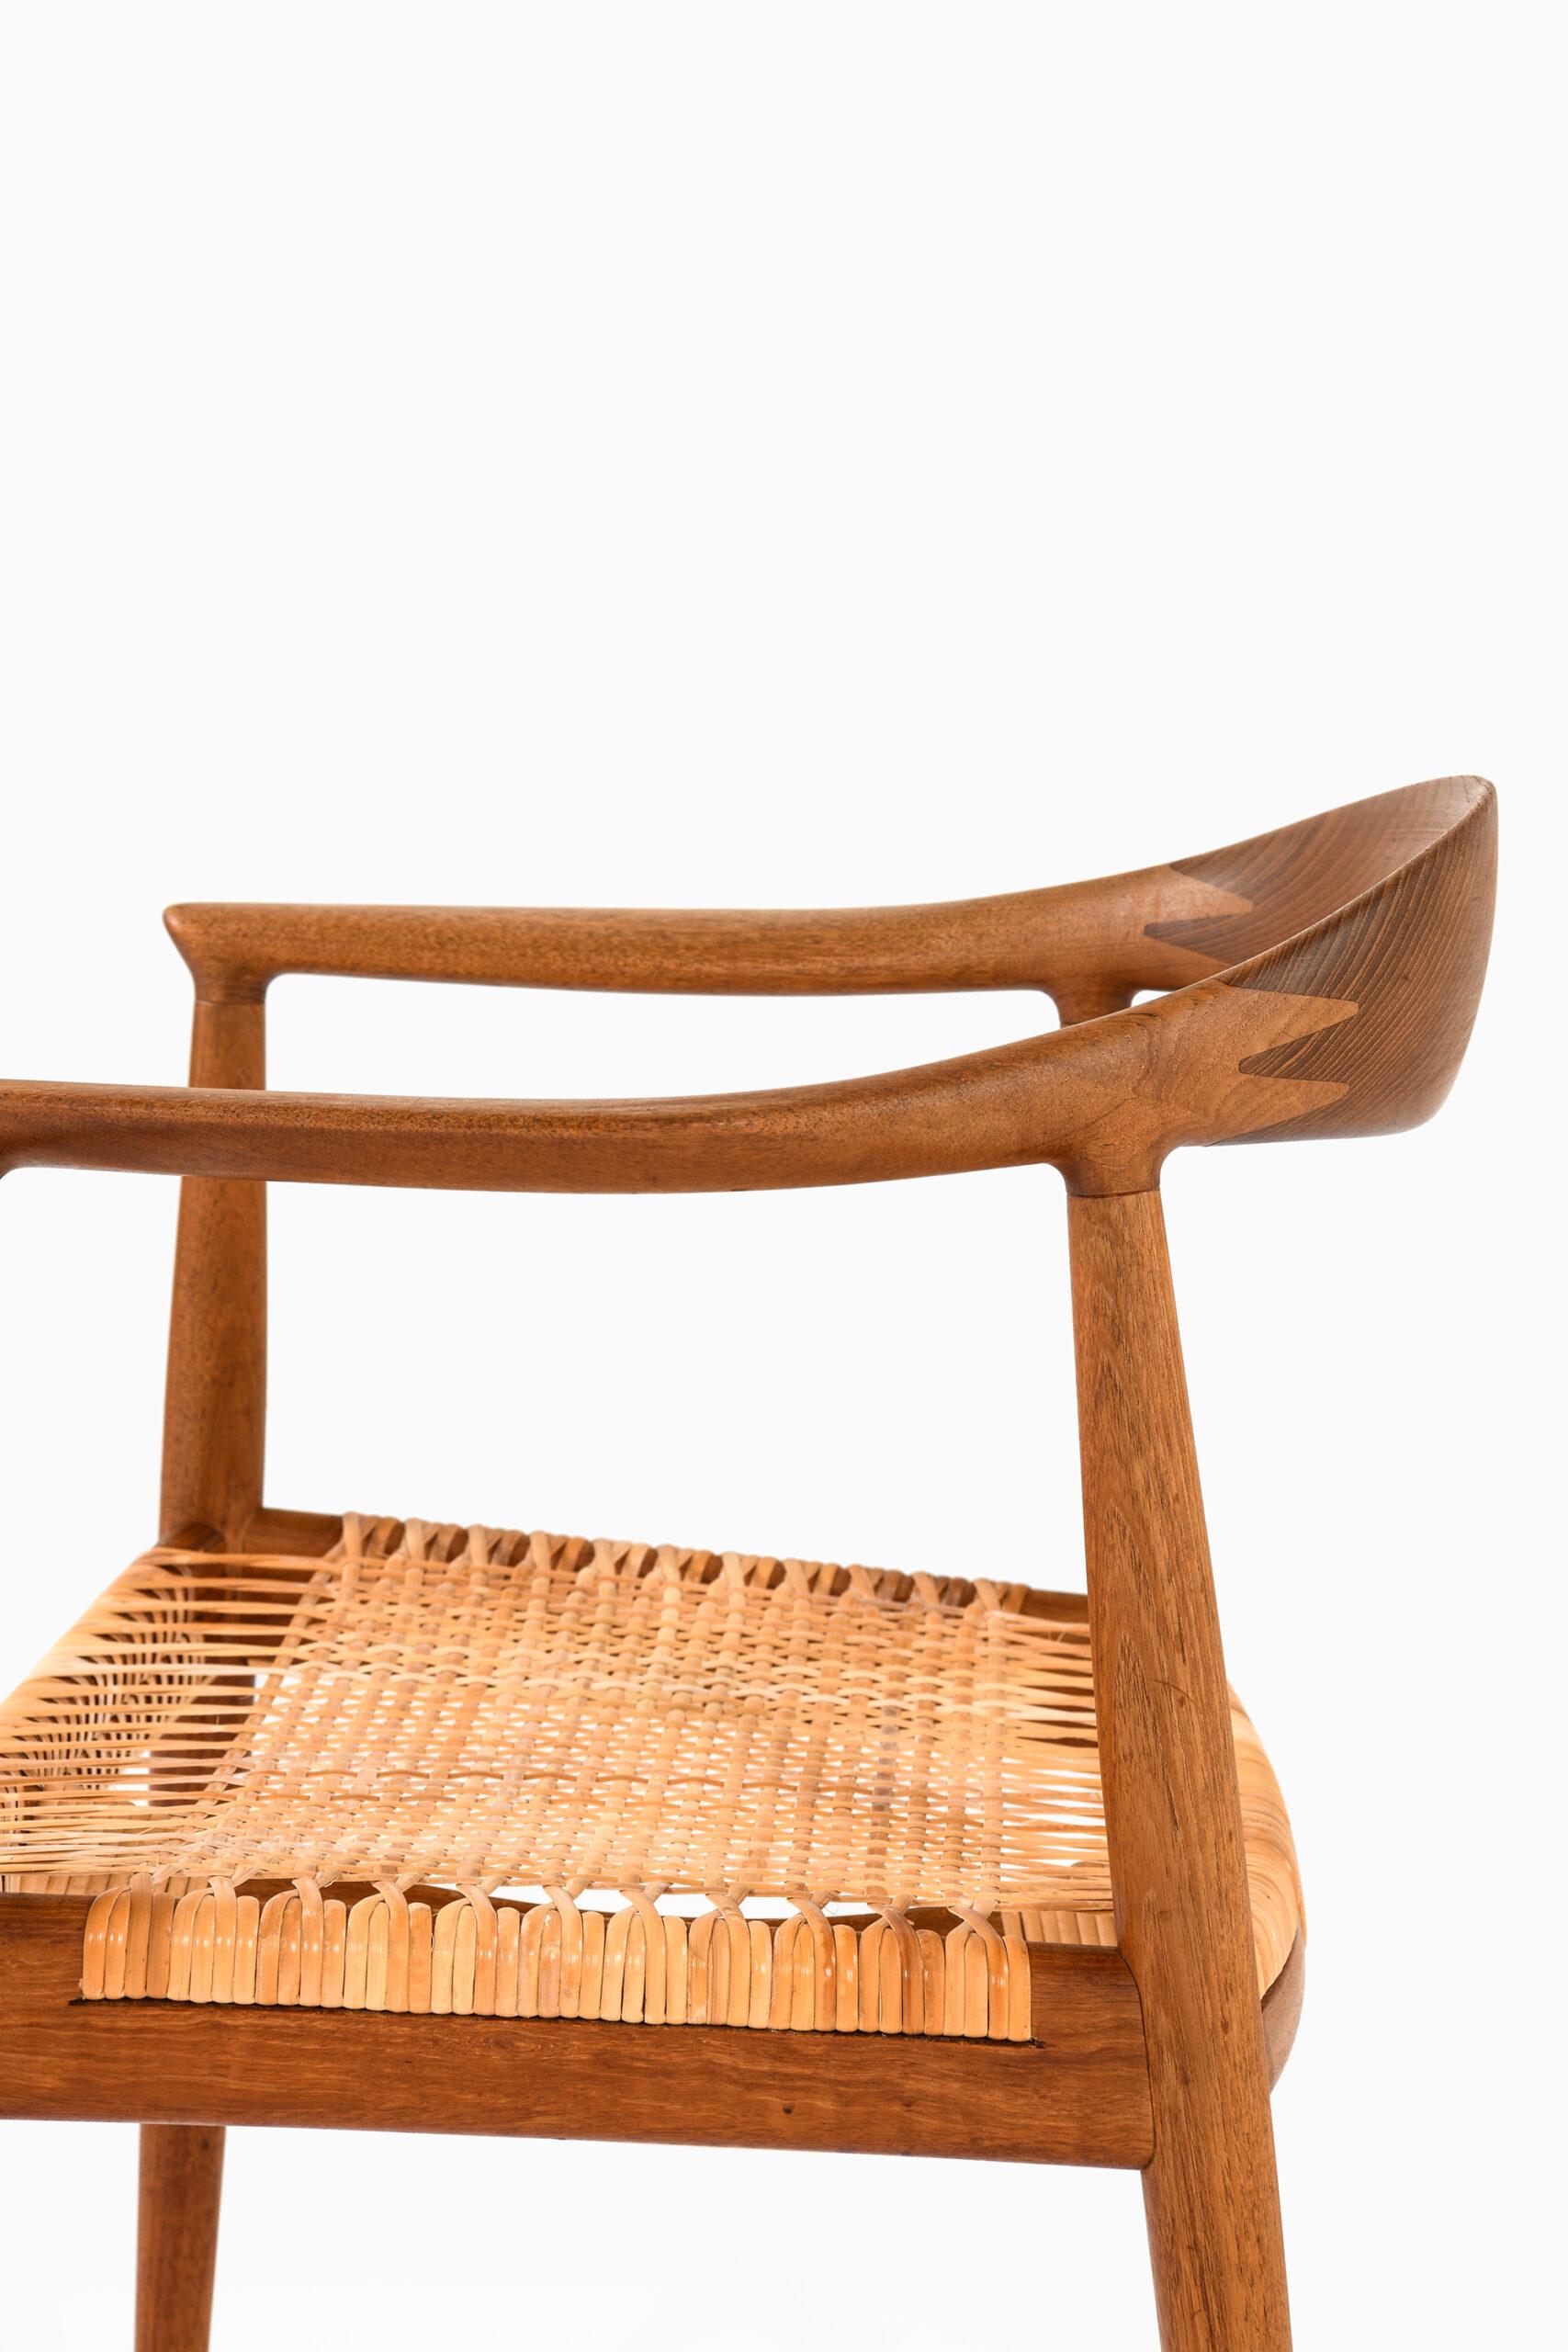 Mid-20th Century Hans Wegner Armchair Model Jh-501 / the Chair by Johannes Hansen in Denmark For Sale